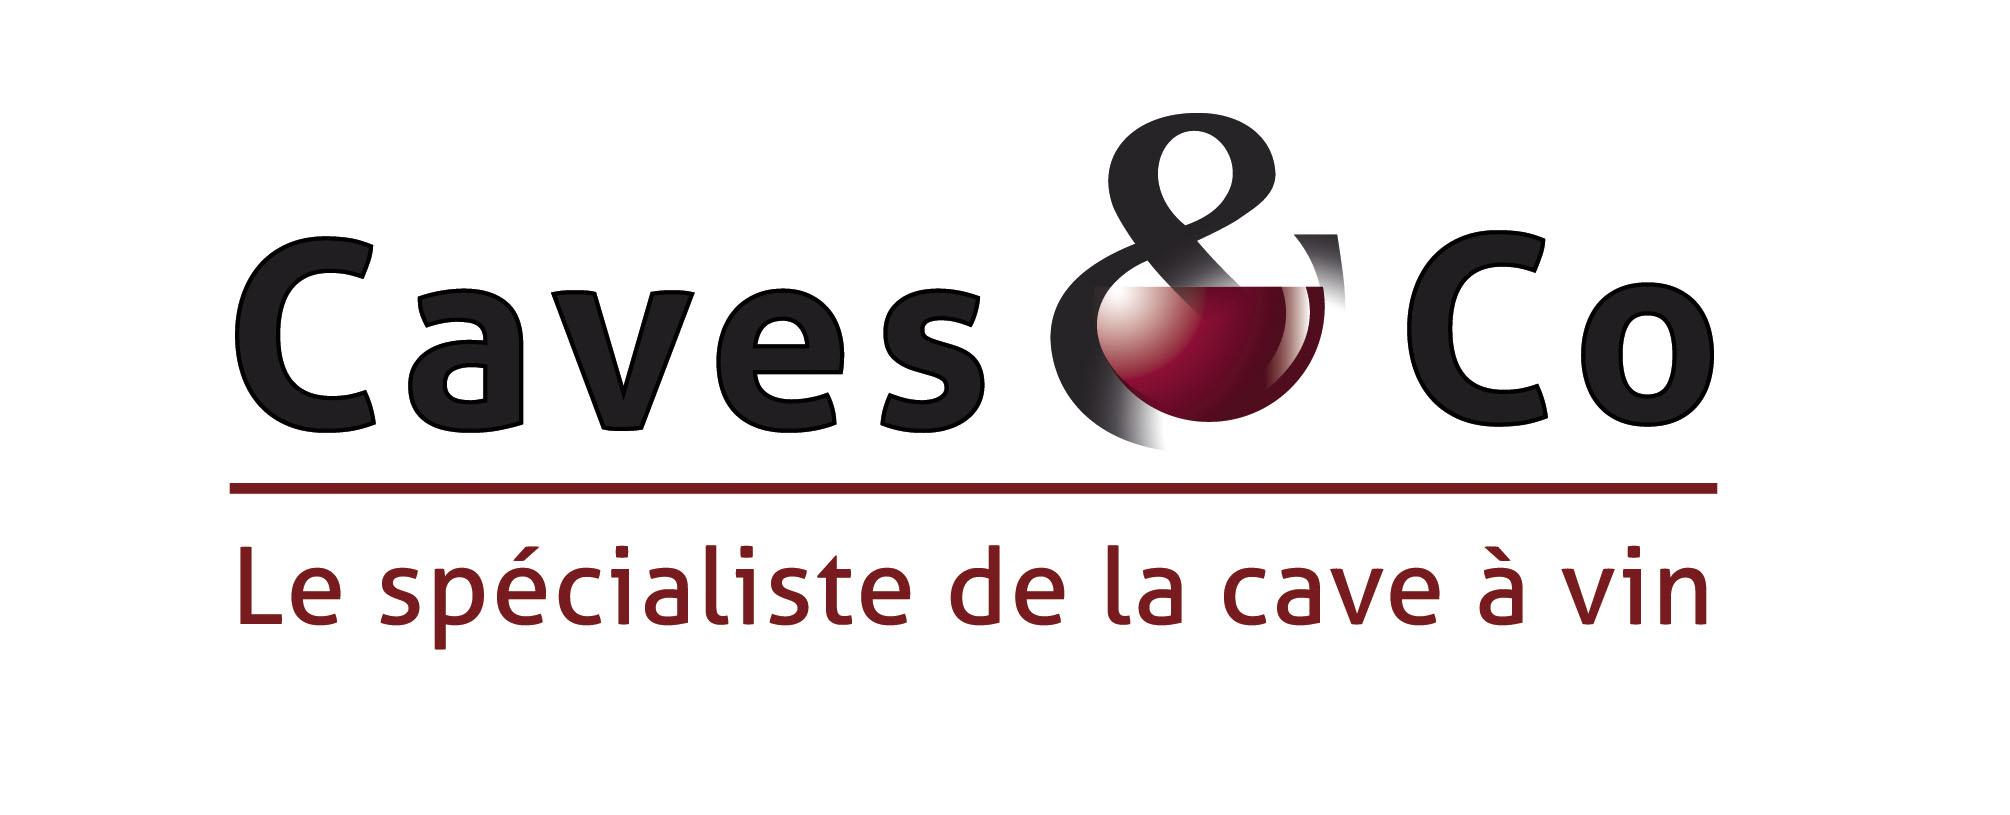 Cave Co. Logo photo - 1